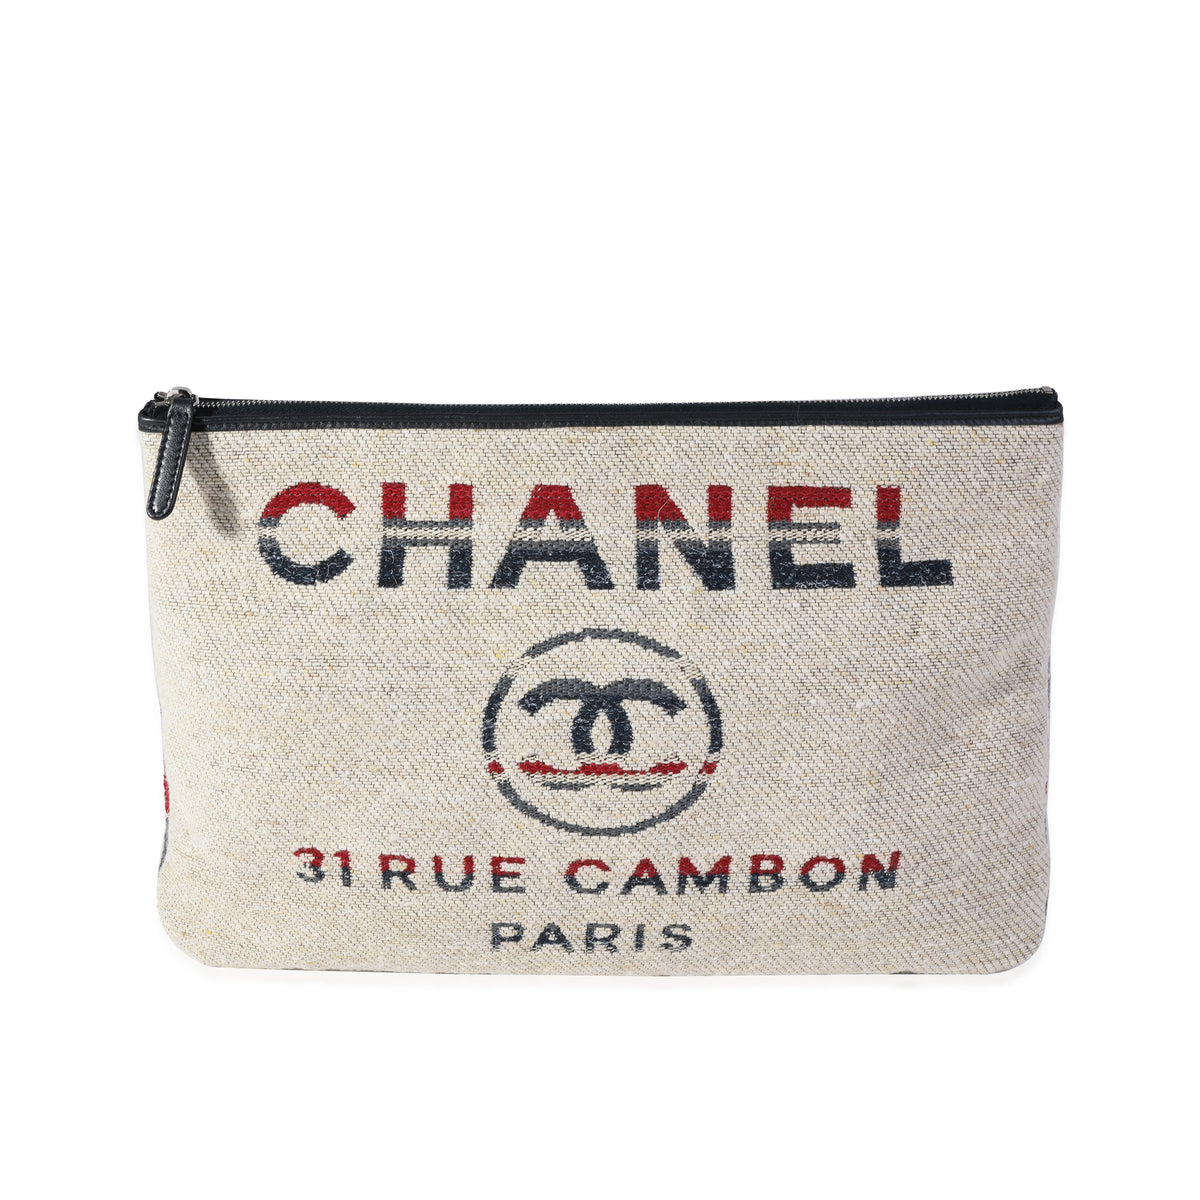 Chanel Blue Canvas & Sequins Large Deauville Tote